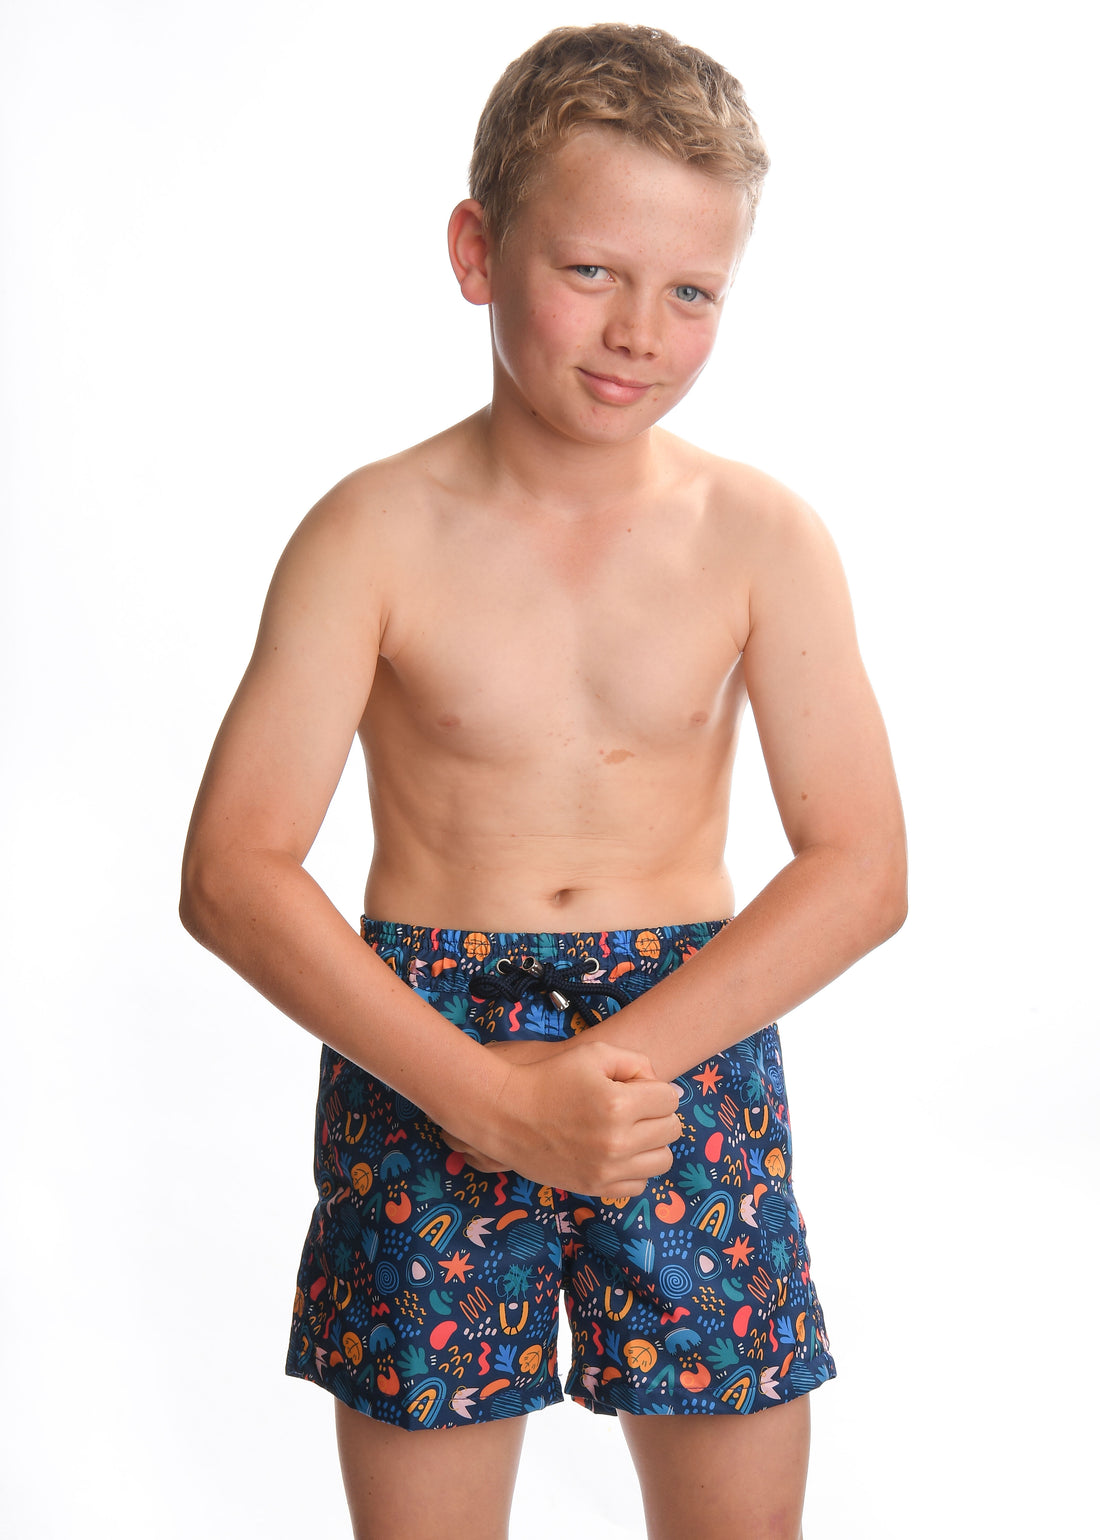 Odd Shapes Boys Board Shorts - Bistro StTropez